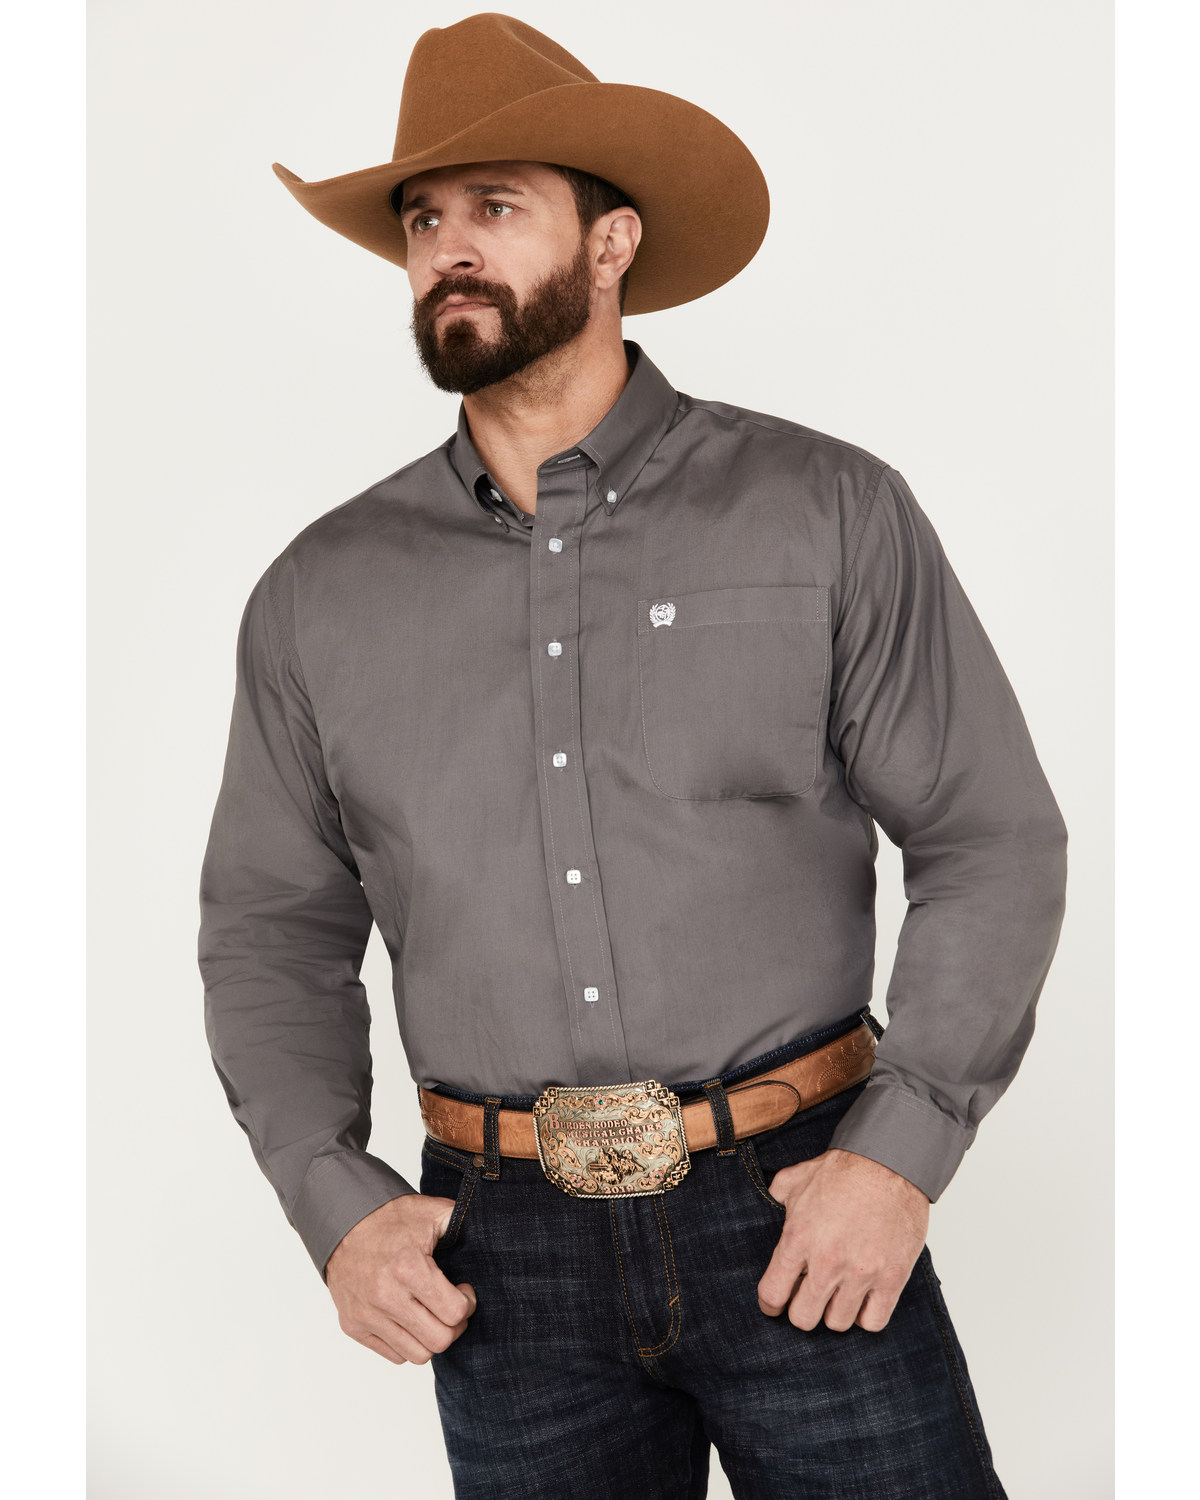 boot barn long sleeve shirts